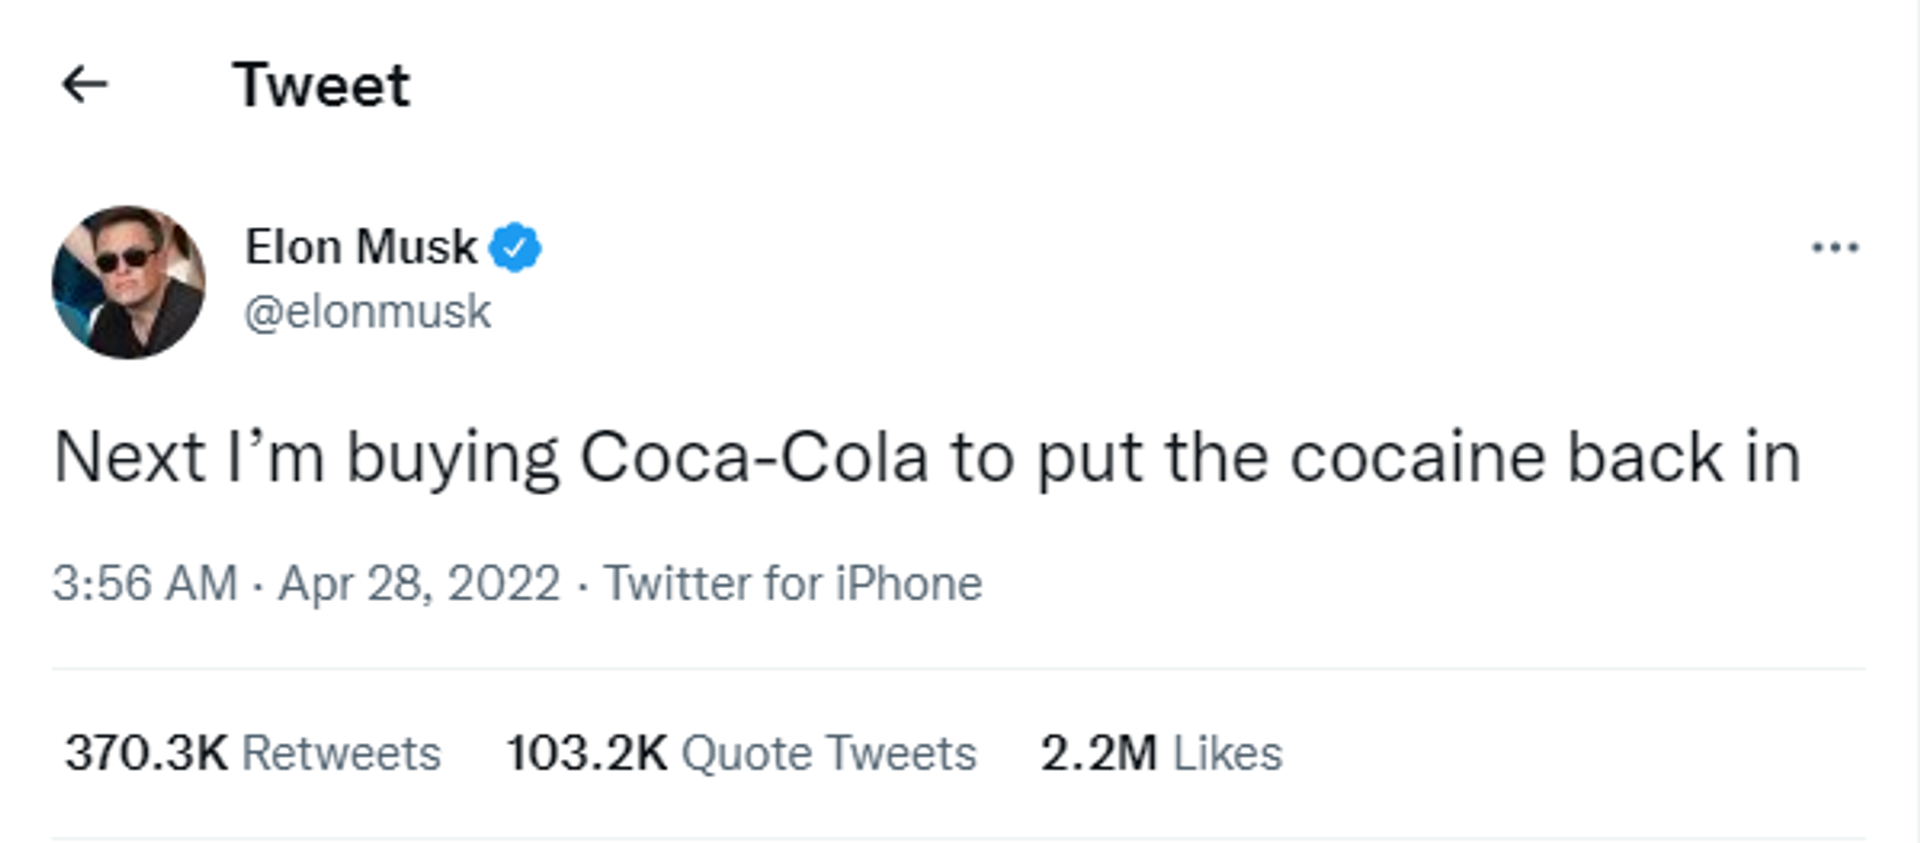 A screenshot of a post by Elon Musk, joking about buying Coca-Cola - Sputnik International, 1920, 28.04.2022